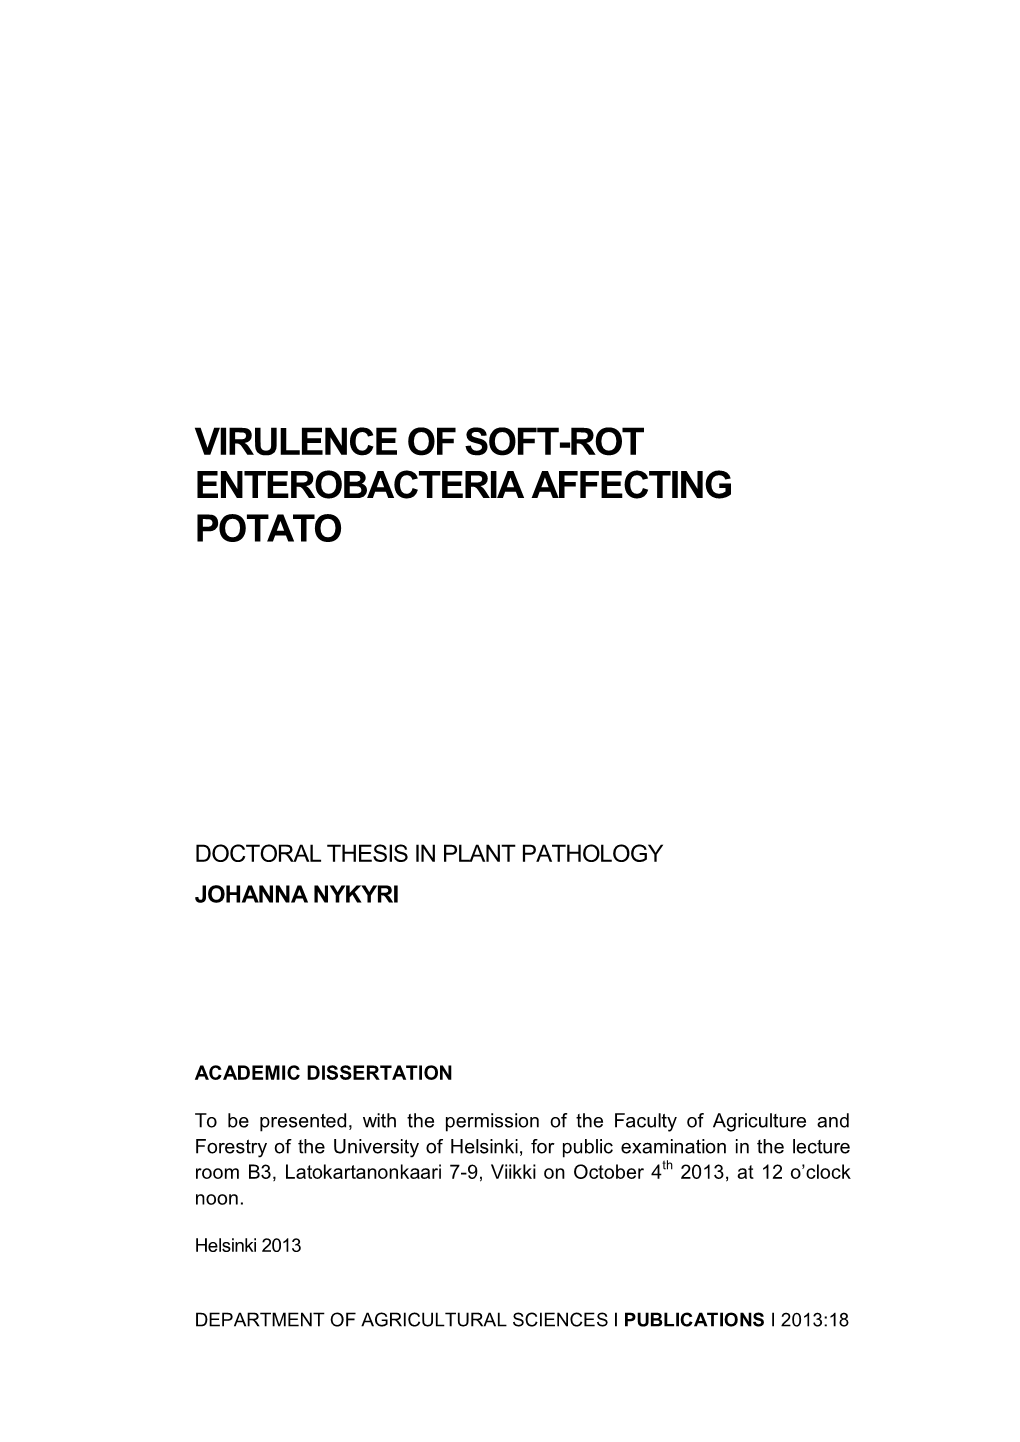 Virulence of Soft-Rot Enterobacteria Affecting Potato